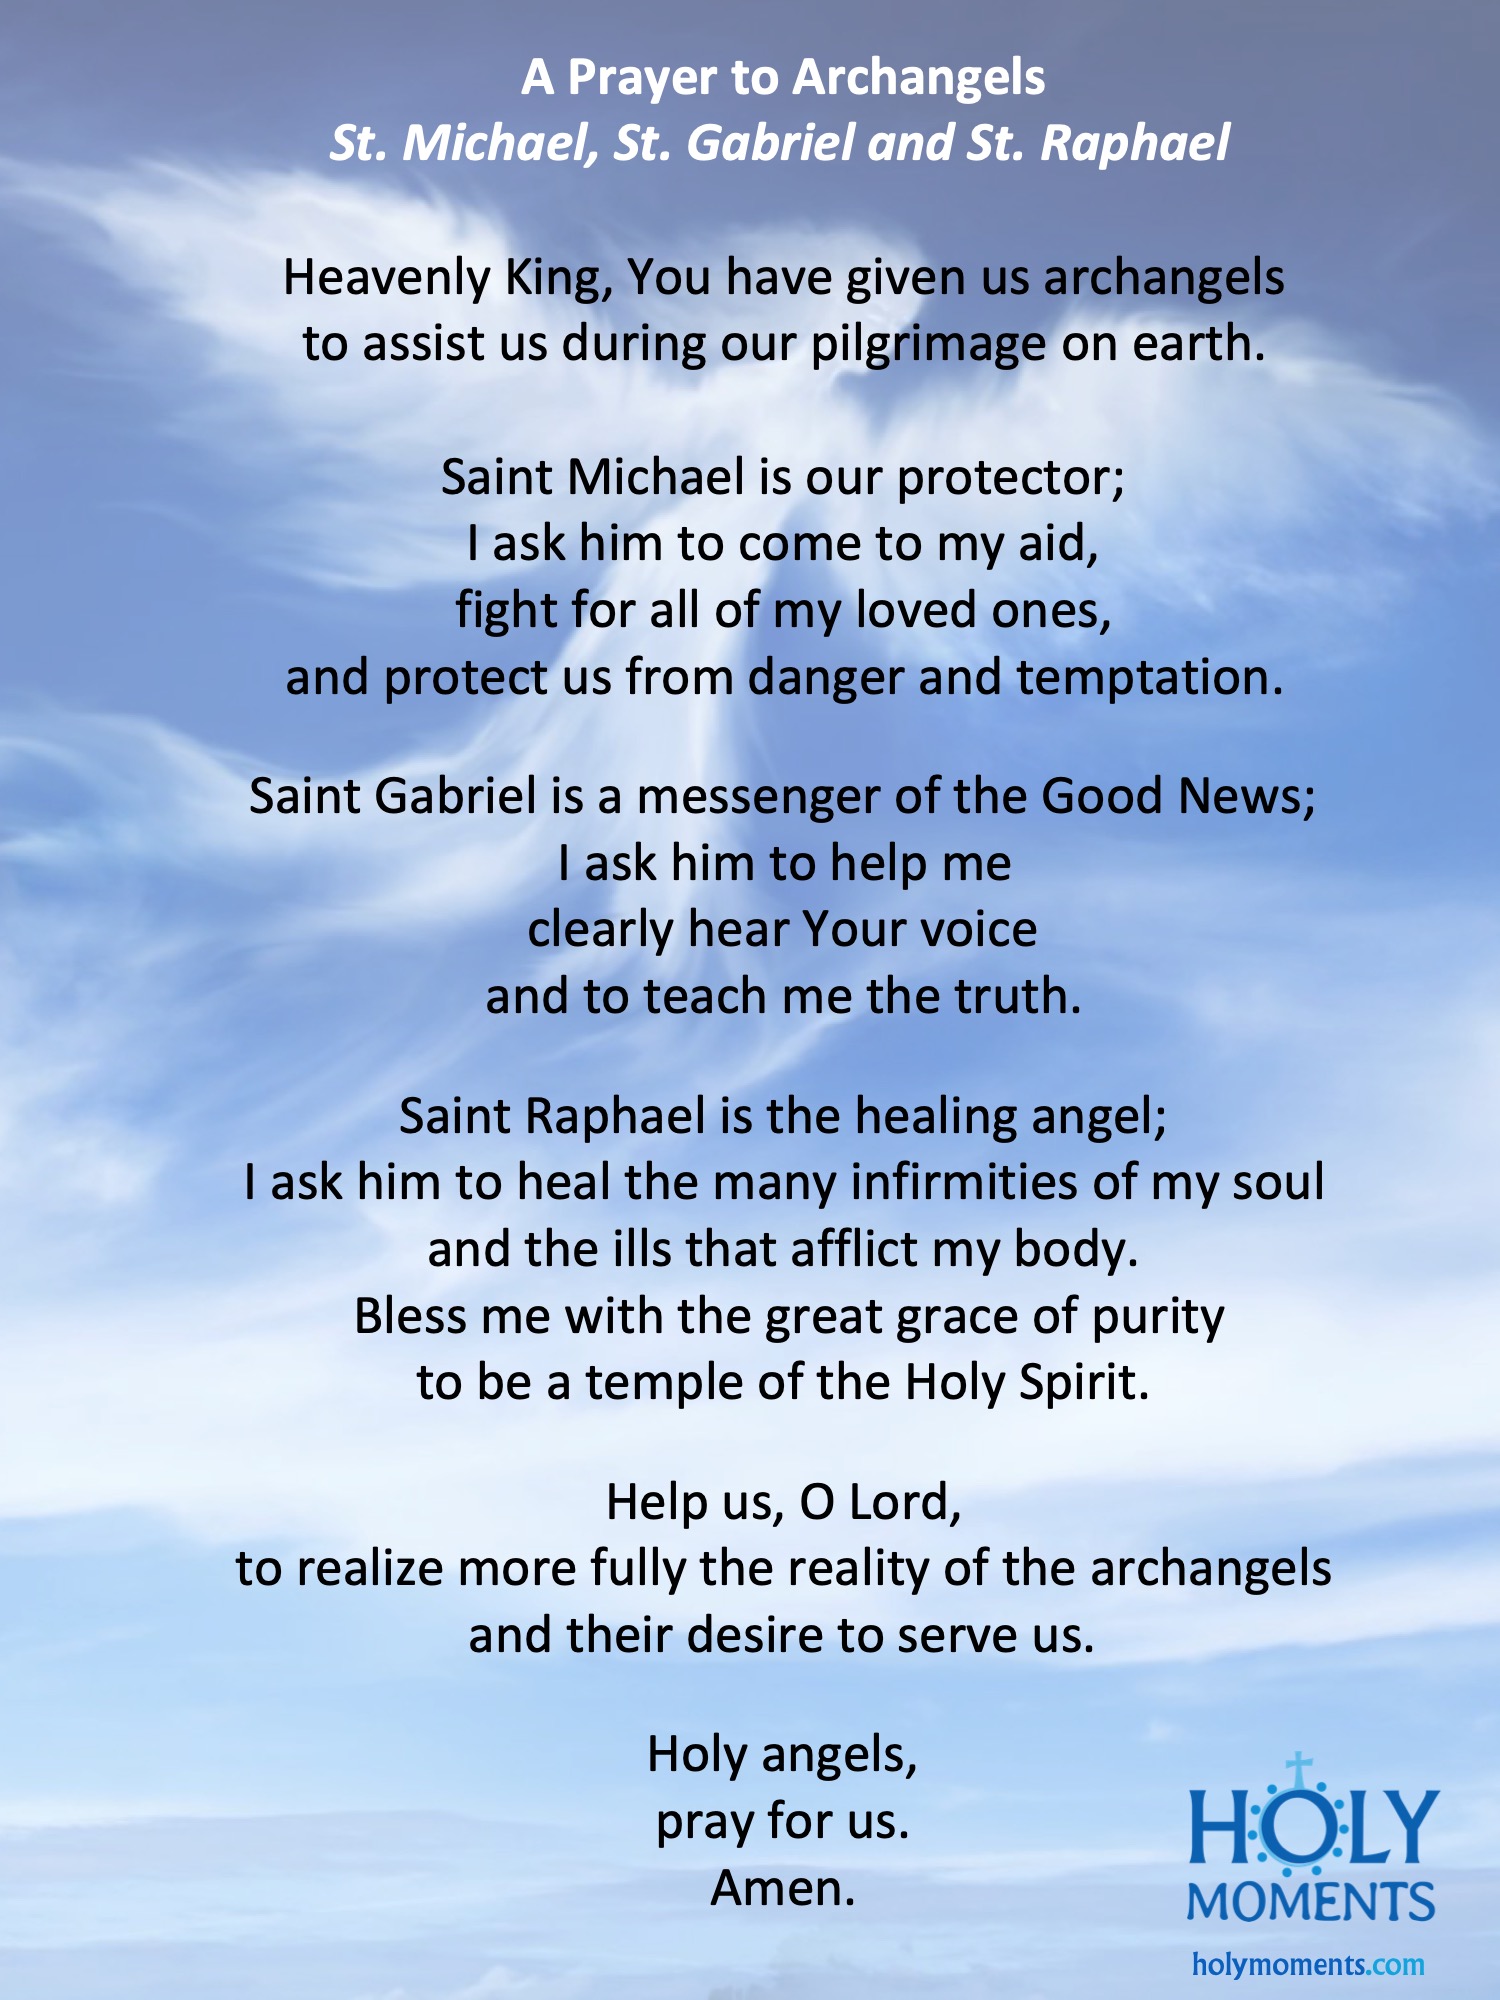 Prayer to the Archangels